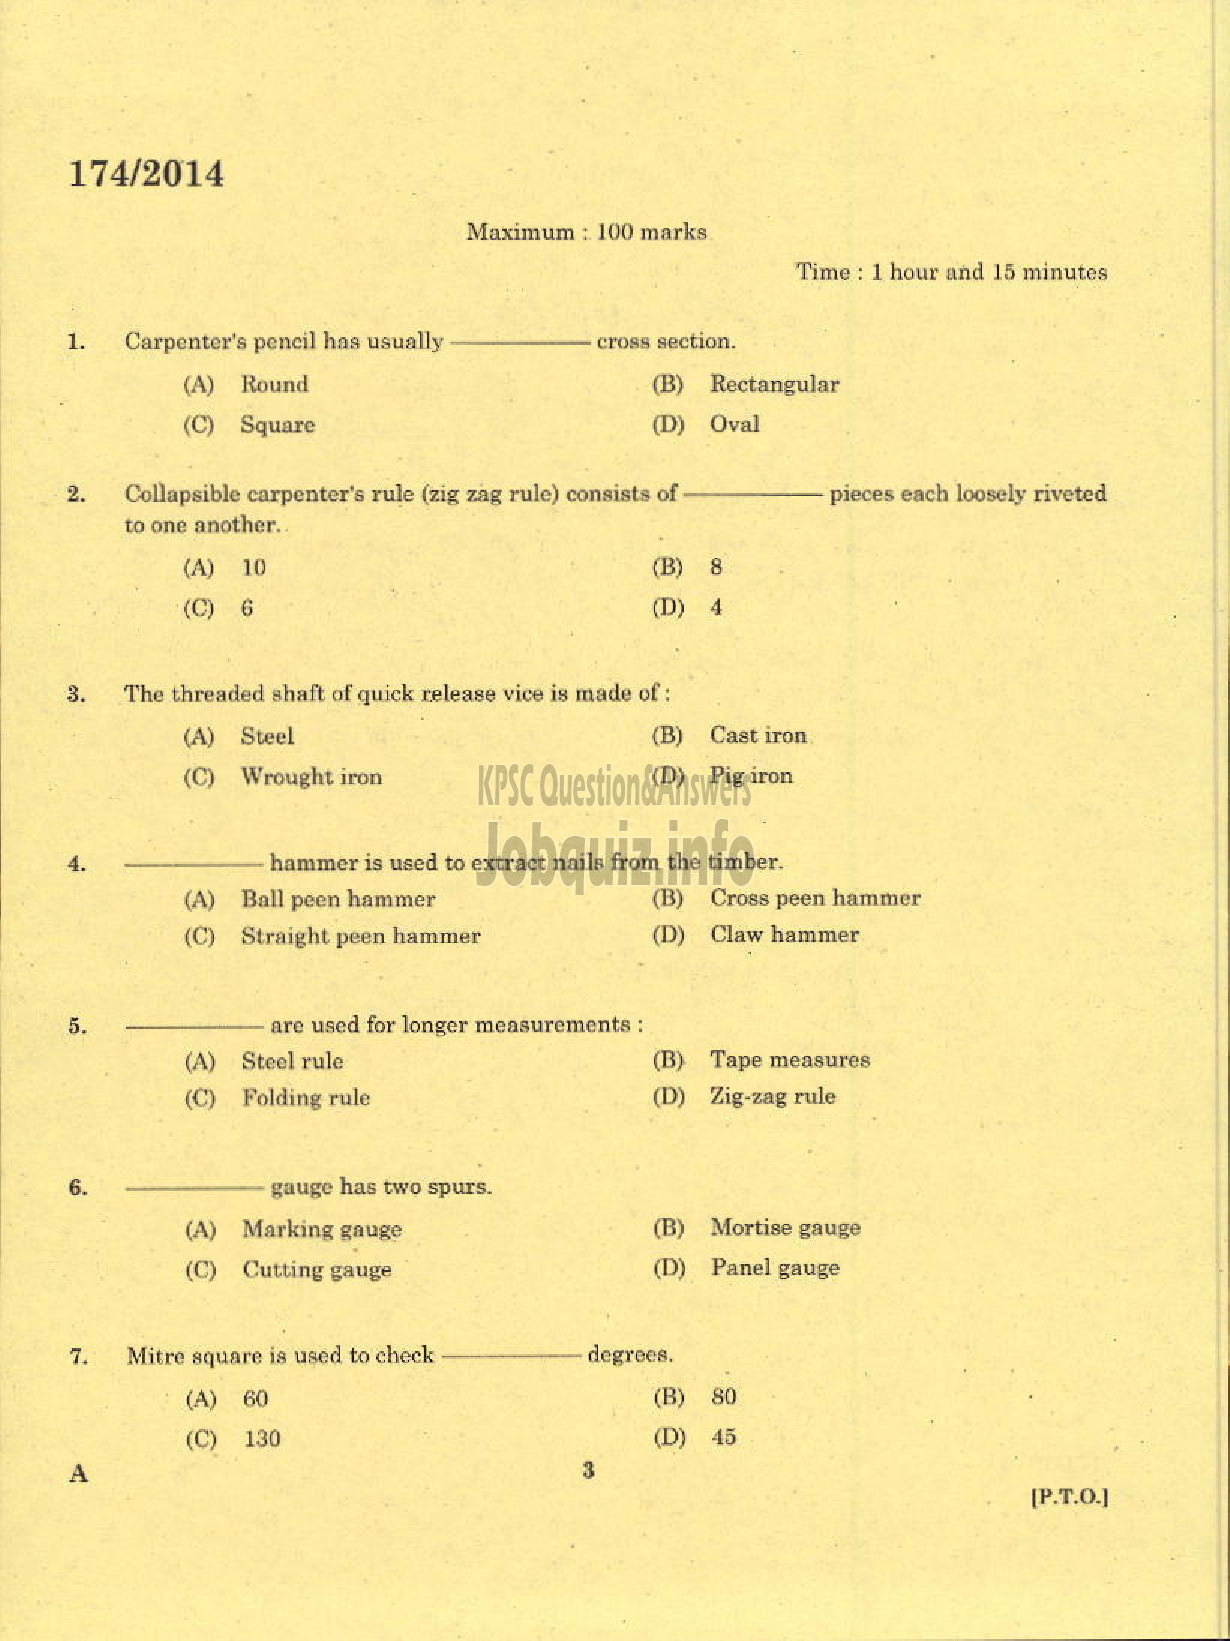 Kerala PSC Question Paper - TRADESMAN CARPENTRY TECHNICAL EDUCATION TVPM PTA ALP IDK EKM WYD AND KGD DIST-1